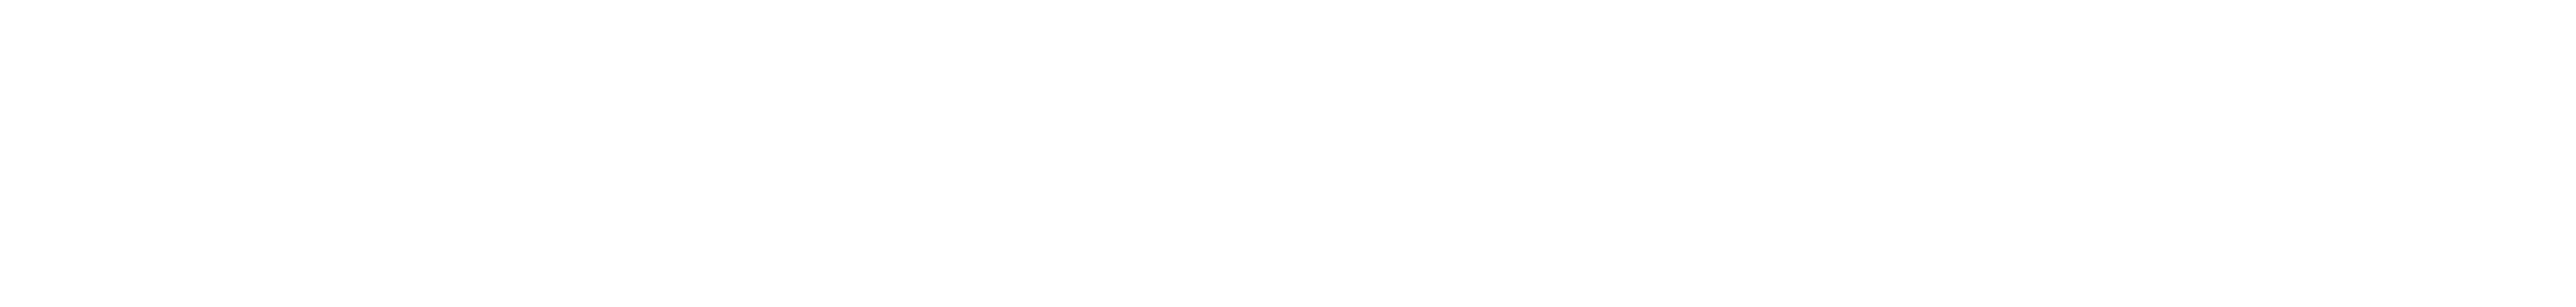 Logo De Decathlon Handball